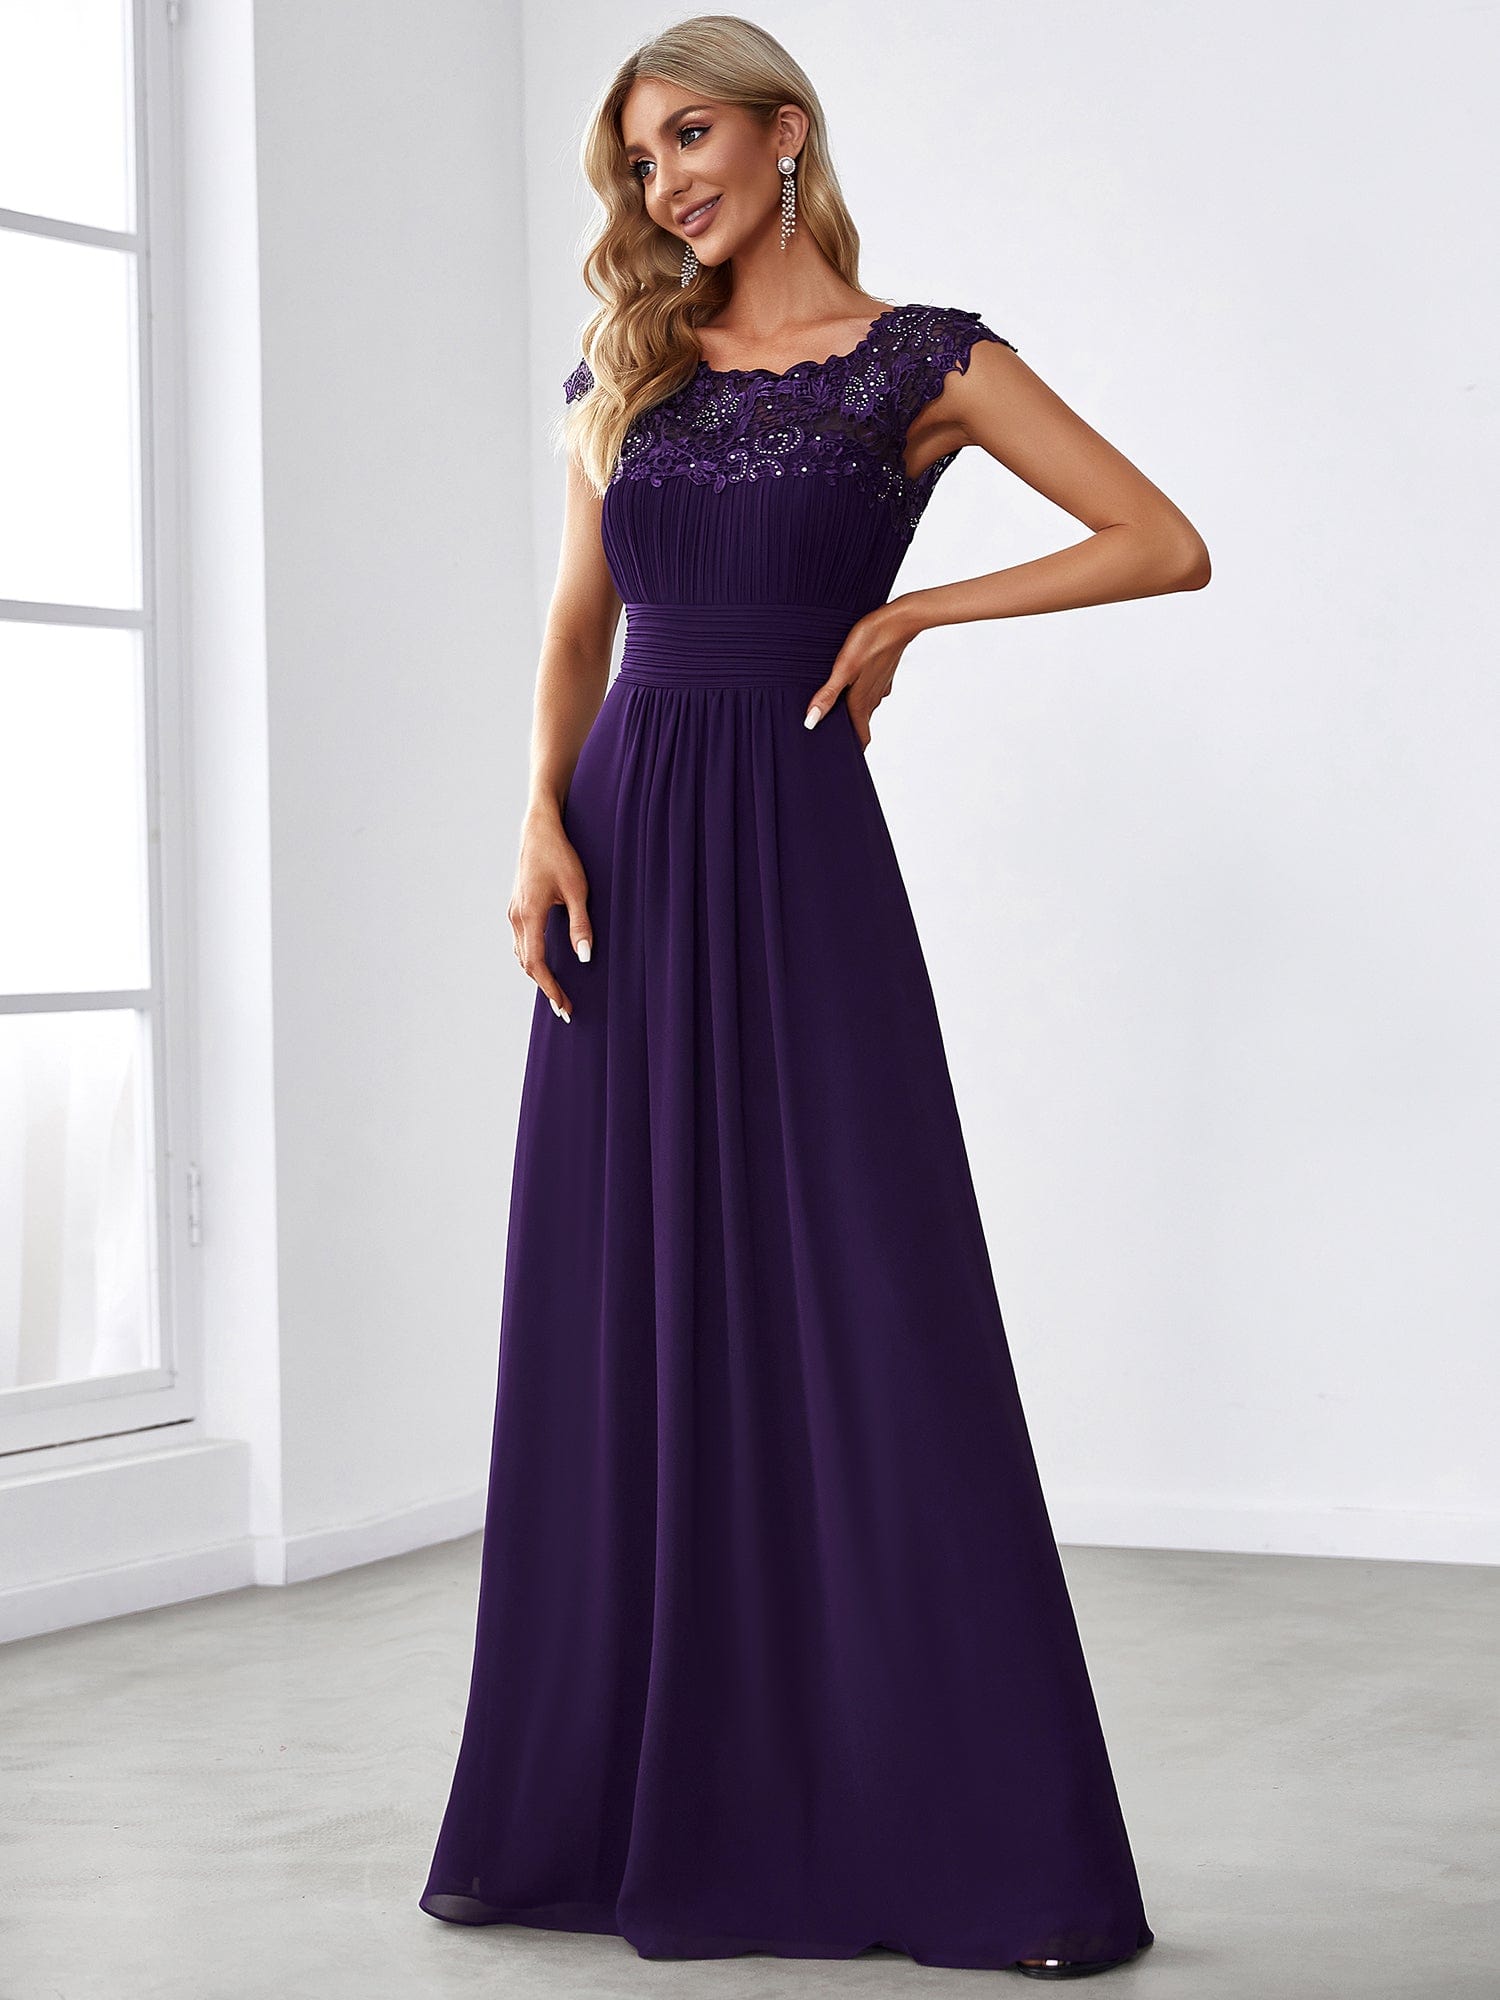 MsDresslyEP Formal Dress Maxi Lace Cap Sleeve Long Formal Evening Dress